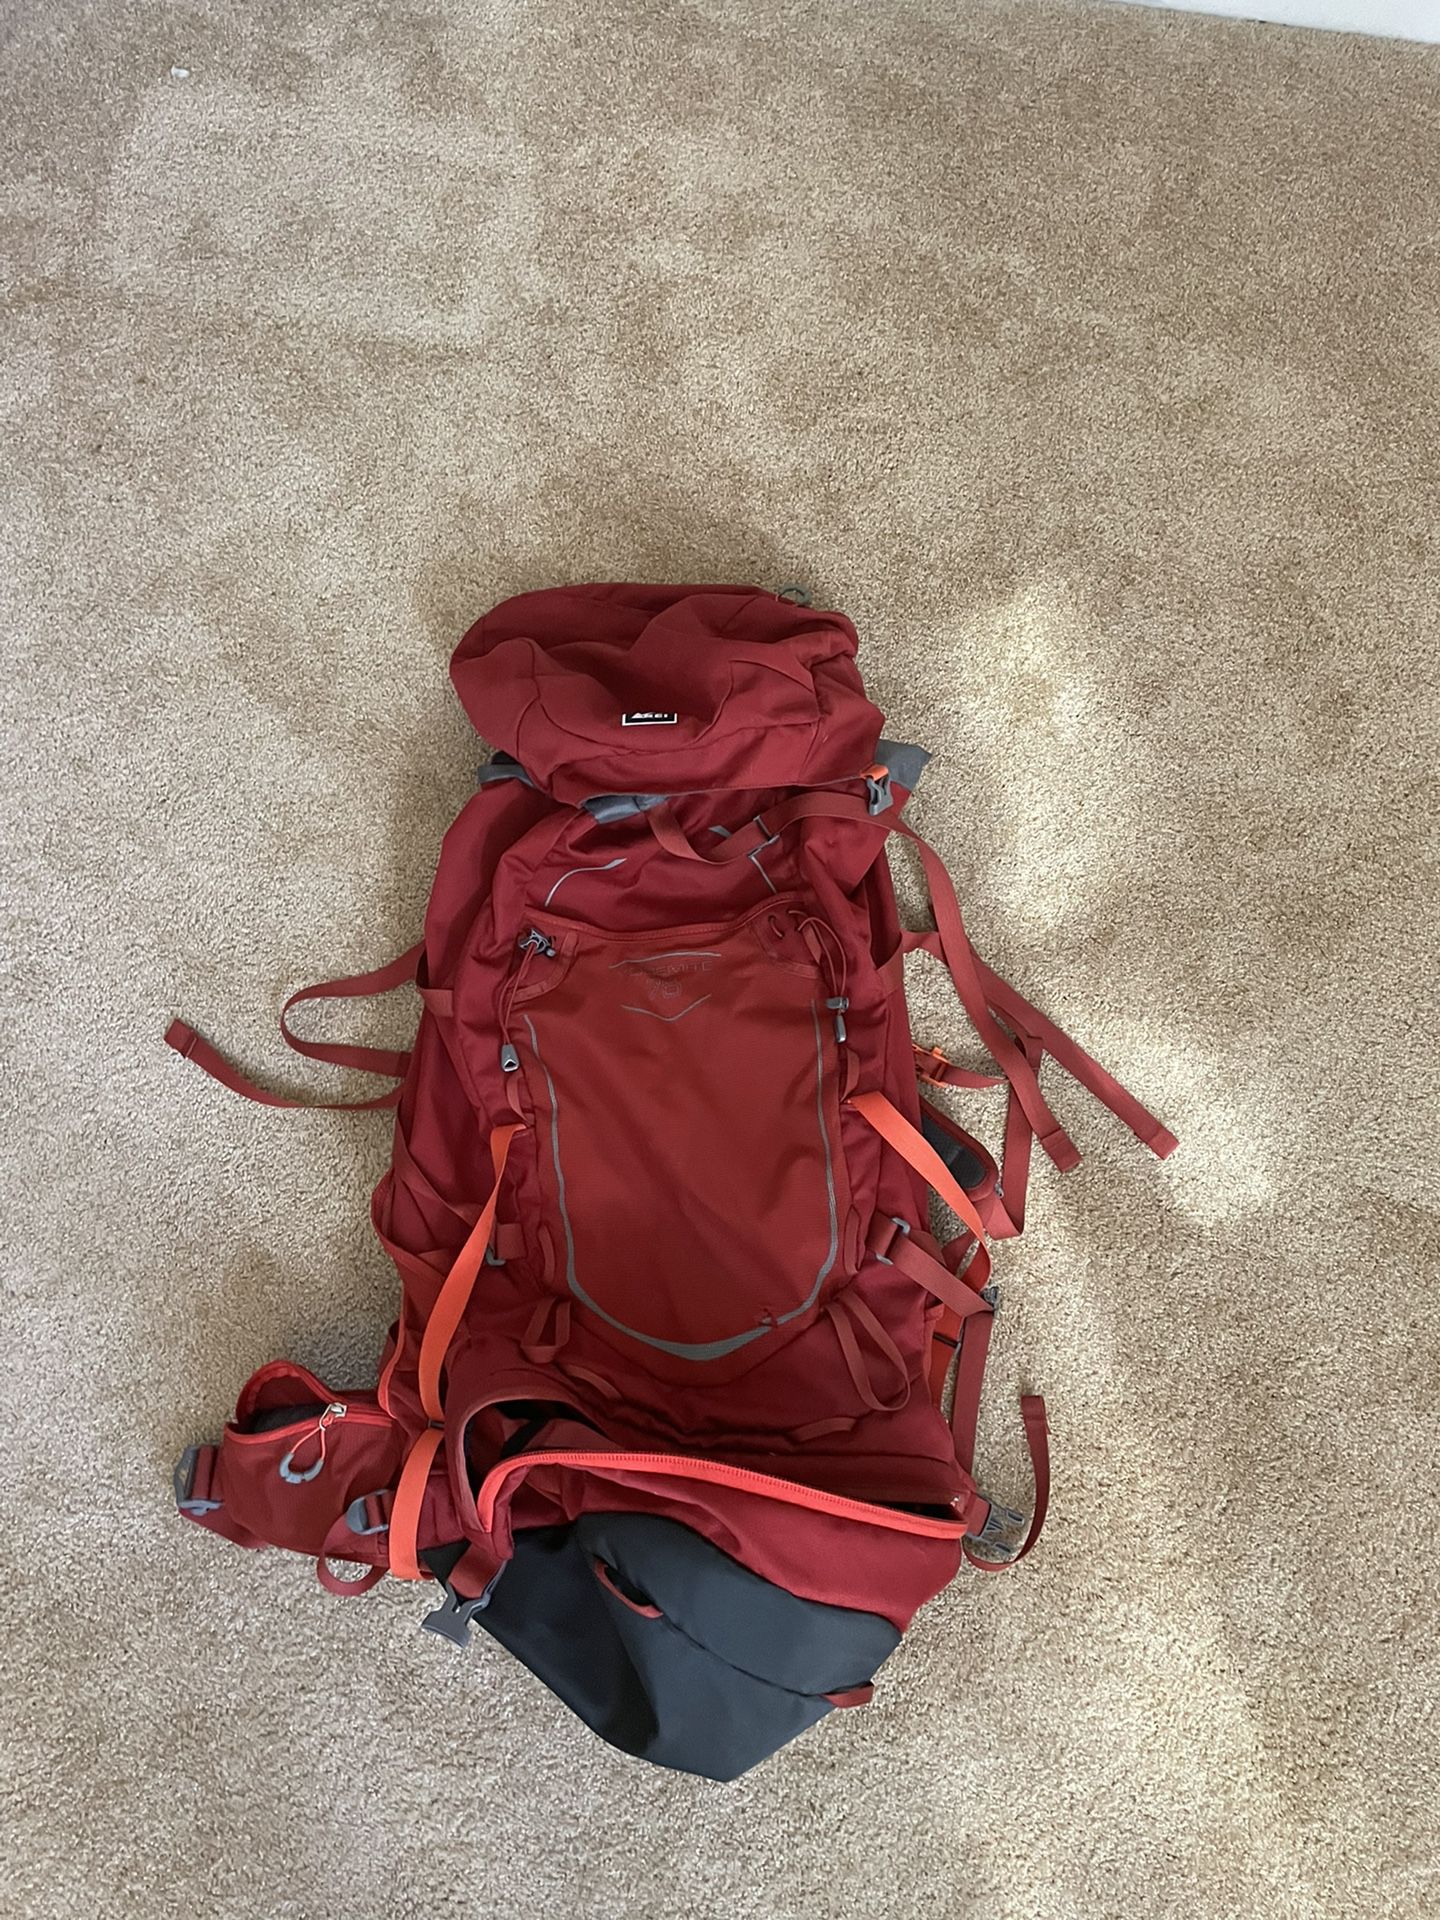 Yosemite 75 REI Backpacking Backpack